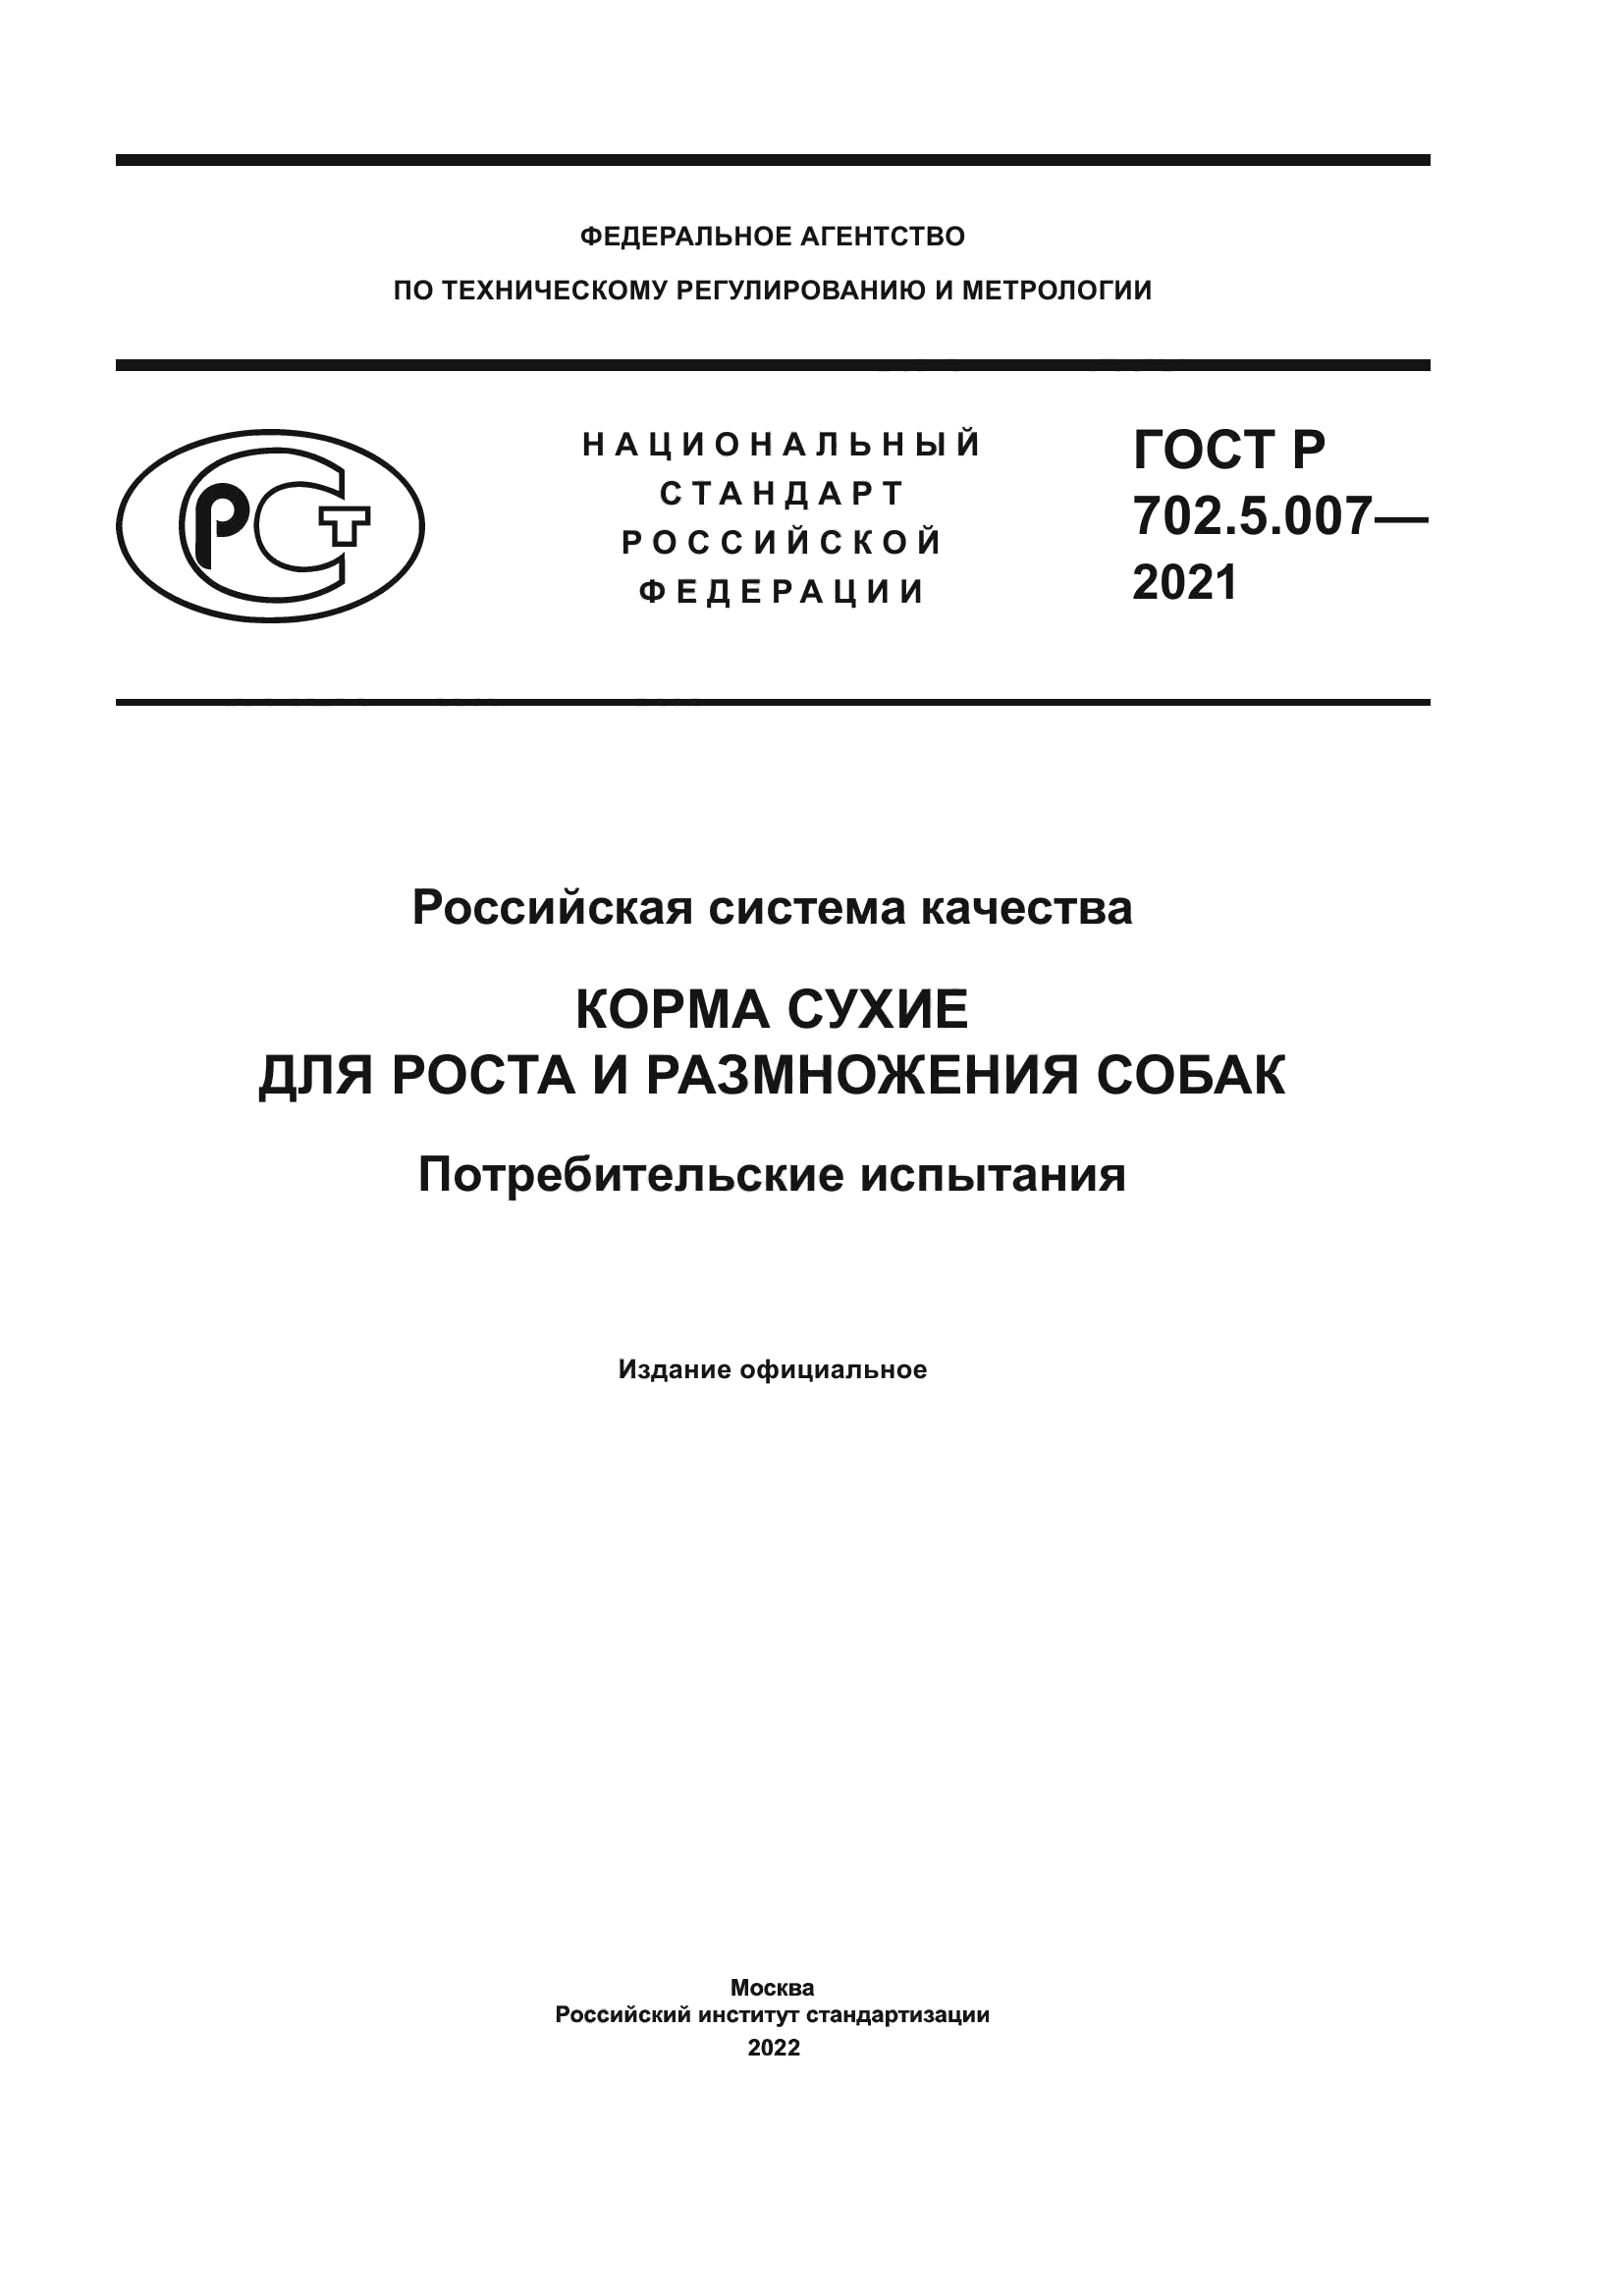 ГОСТ Р 702.5.007-2021